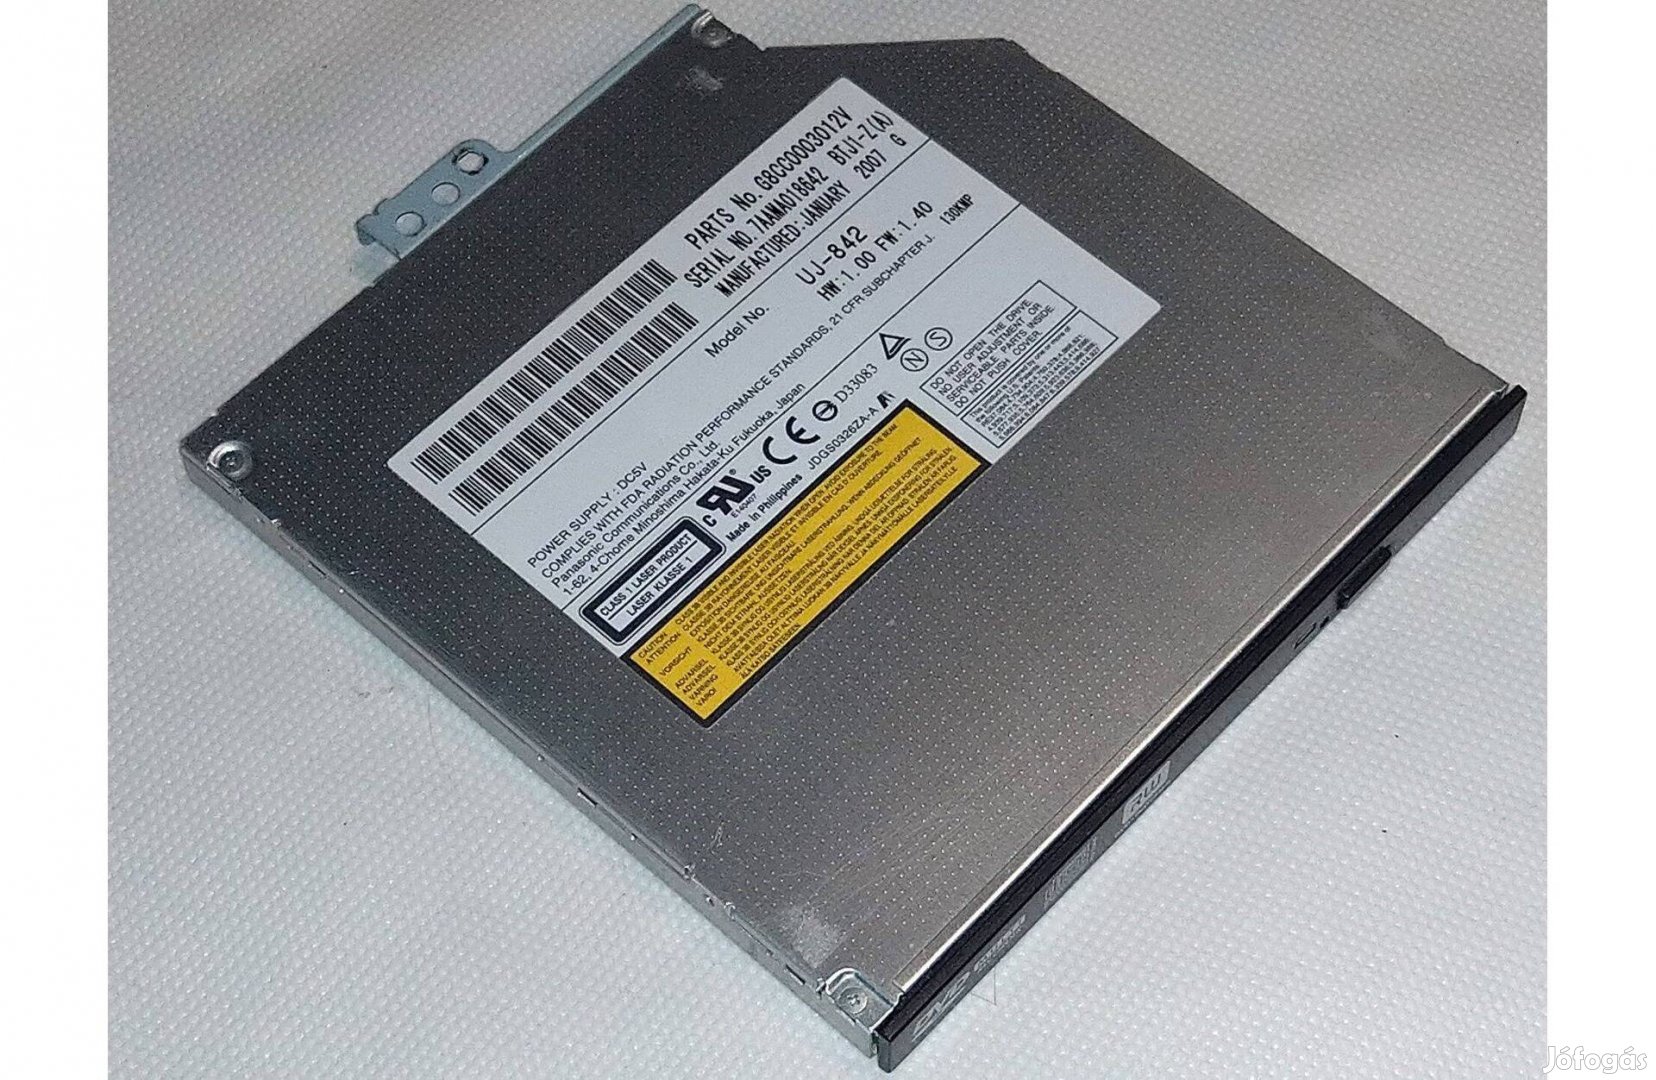 Panasonic Uj-842 DVD-író notebook ultraslim DVDRW Multi Recorder